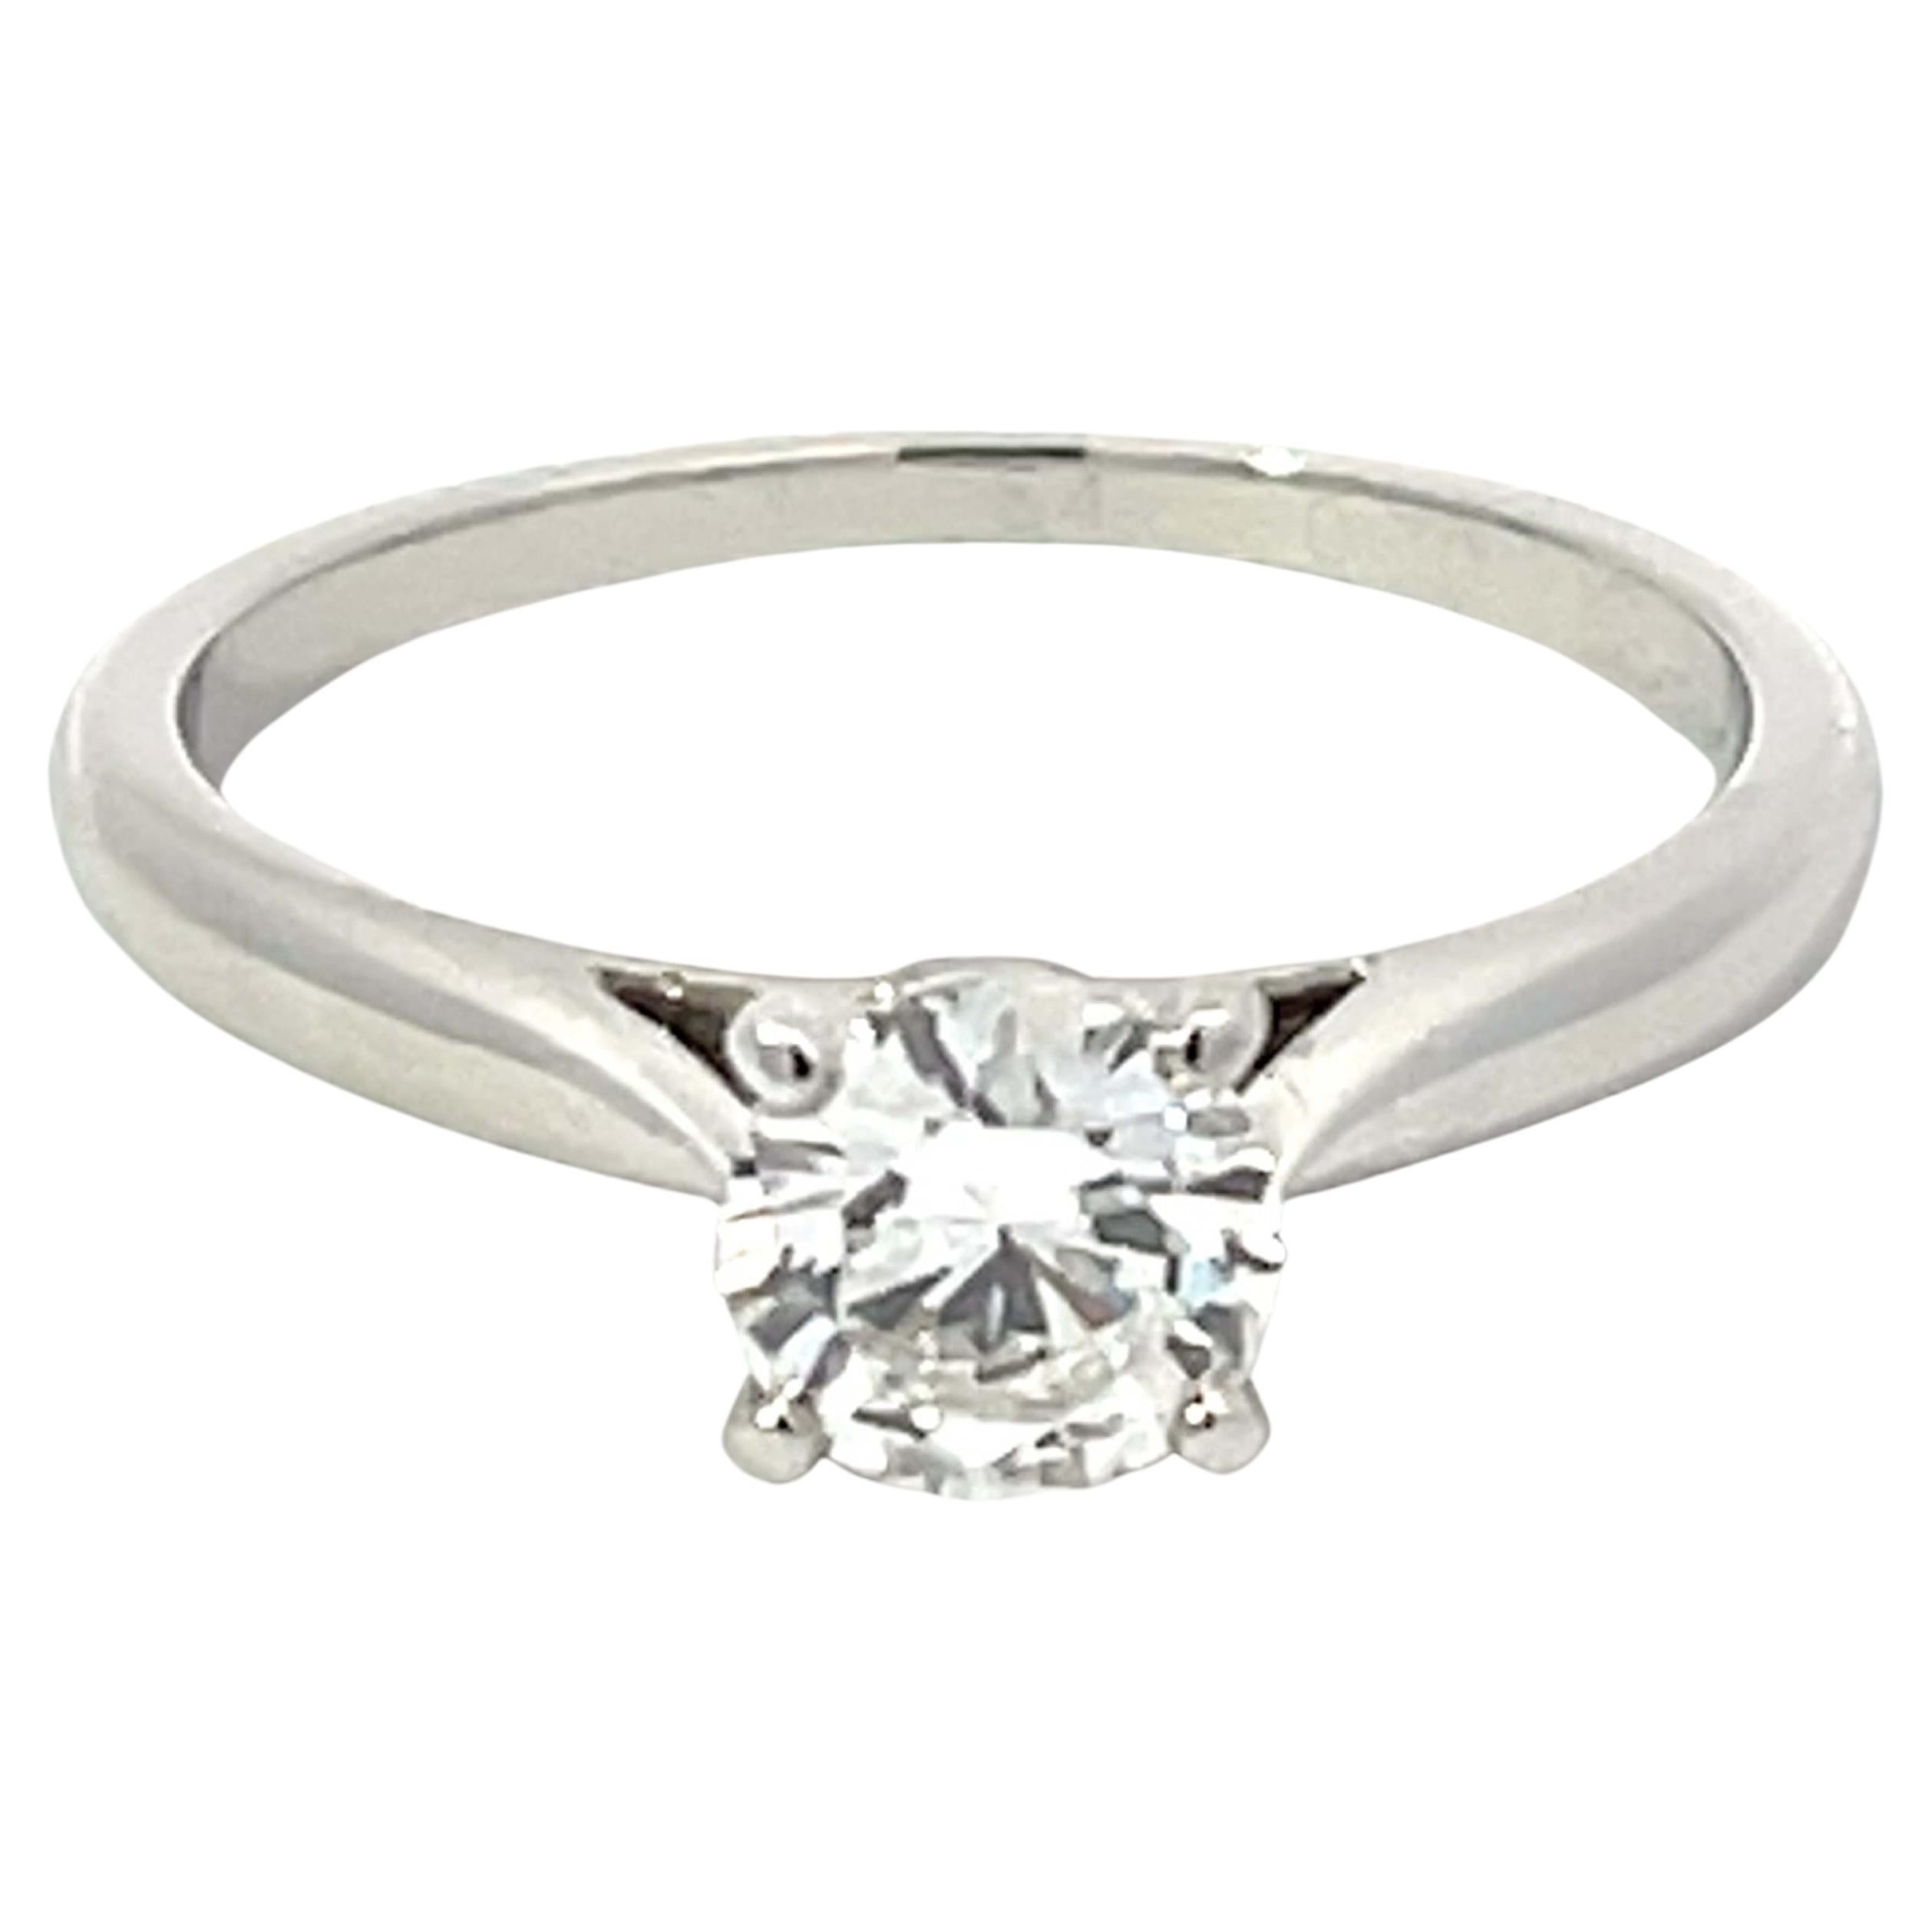 Cartier 1894 Solitaire Diamond Engagement Ring in Platinum, G VS2